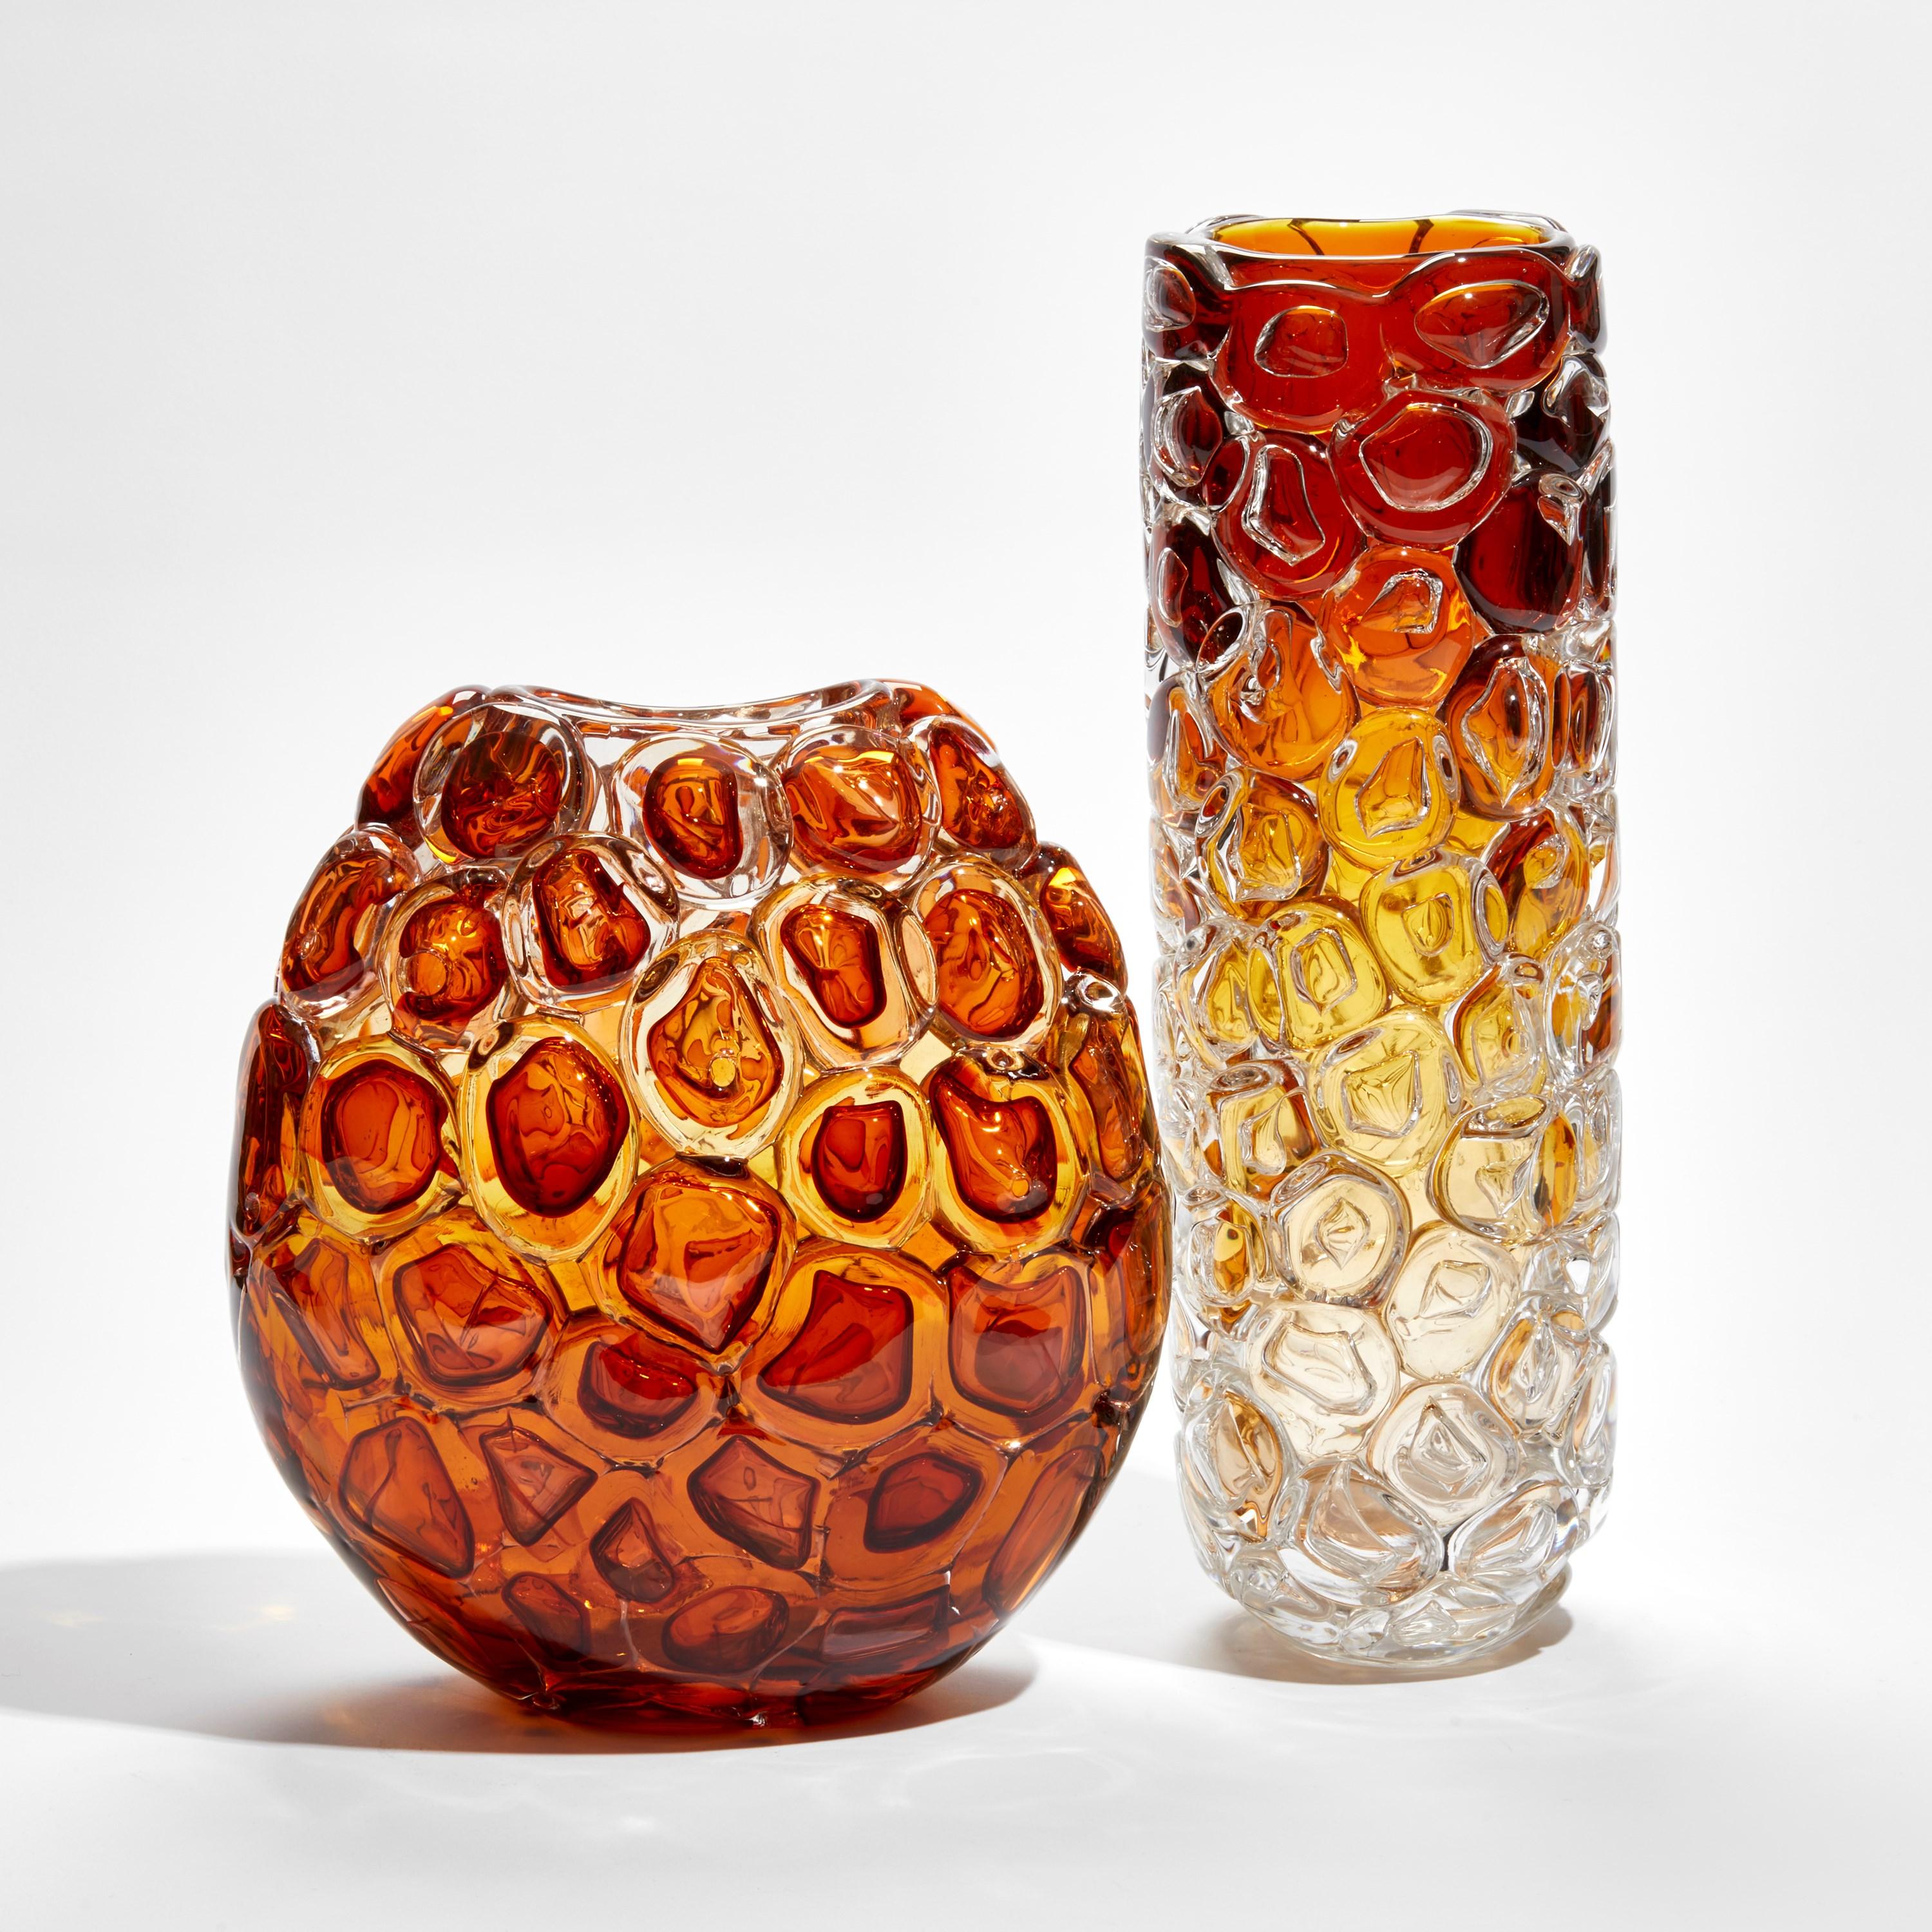 Contemporary Bubblewrap in Yellow & Orange, an Amber / Orange Glass Vase by Allister Malcolm